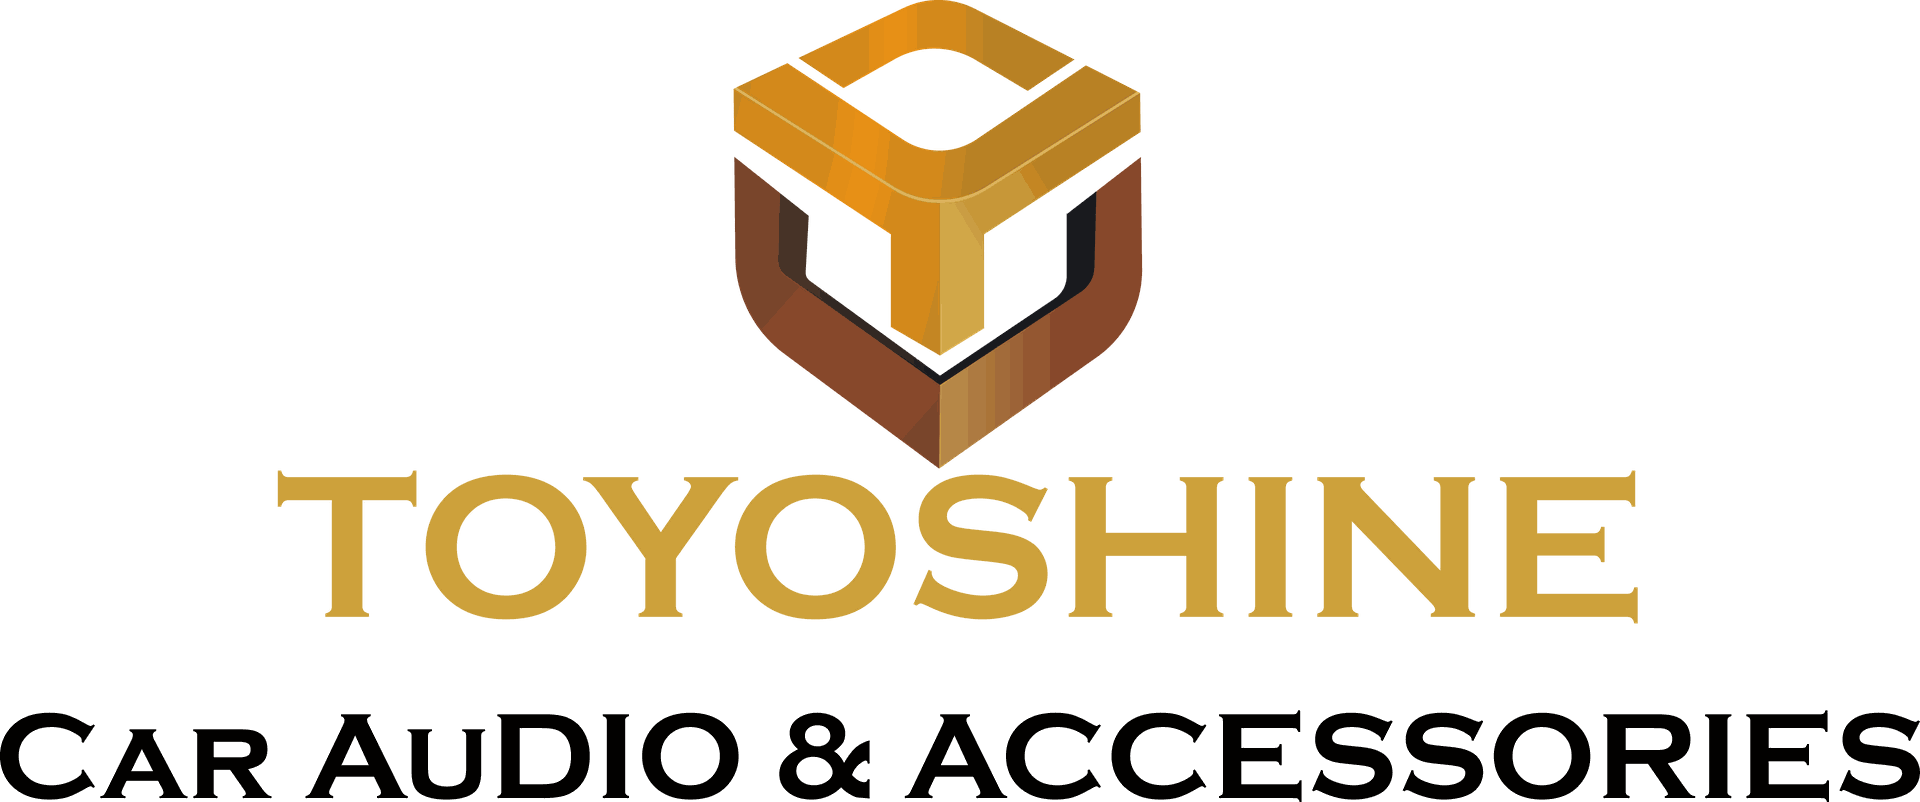 Toyoshine